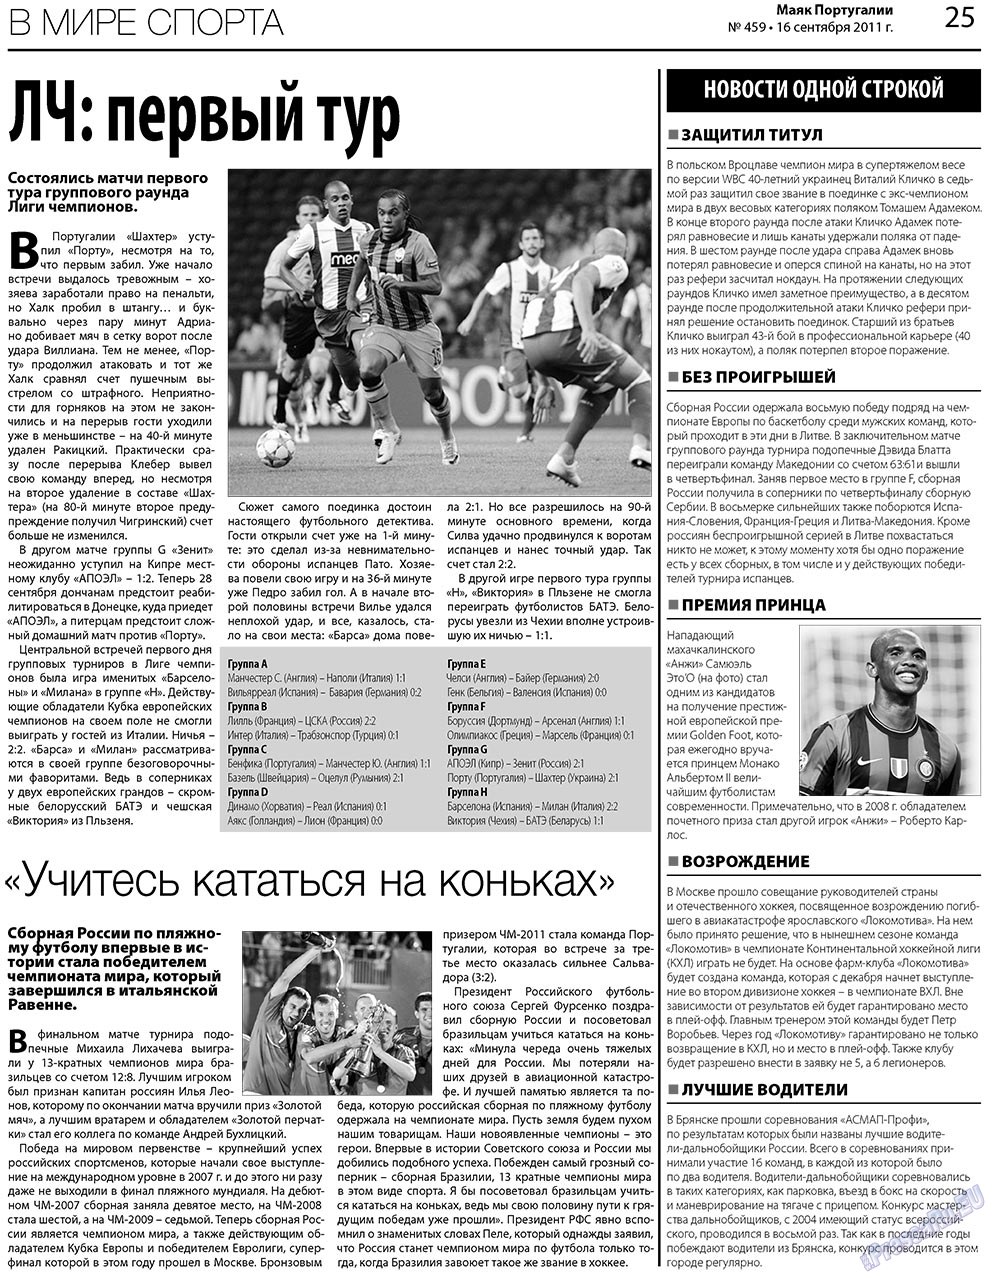 Маяк Португалии, газета. 2011 №459 стр.25